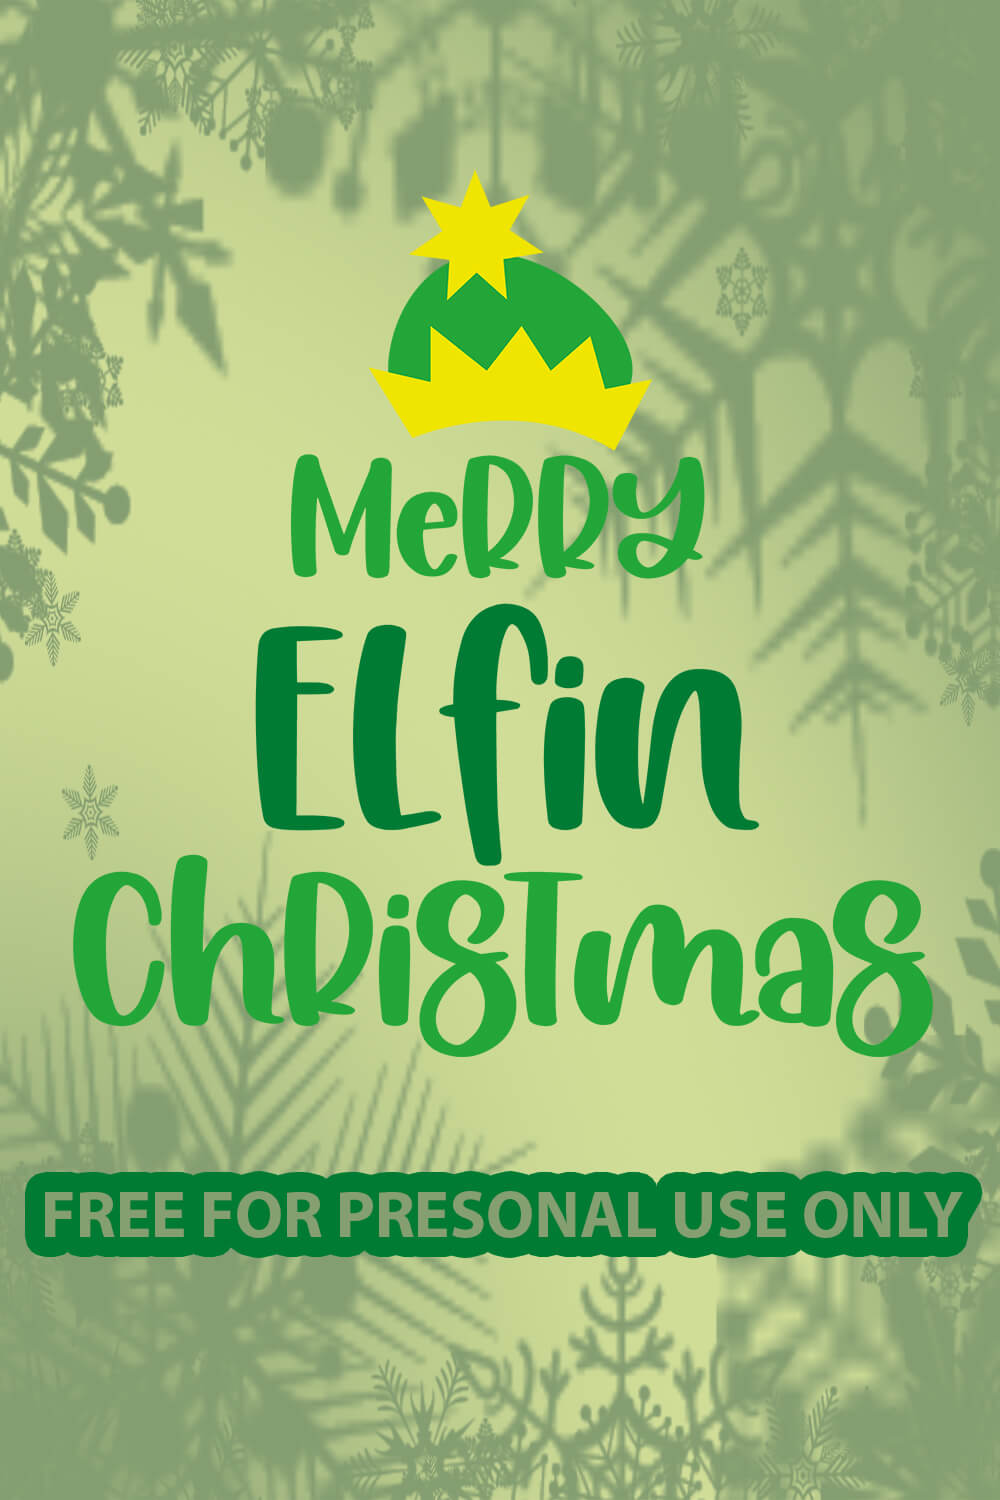 Merry elfin Christmas free SVG files pinterest image.